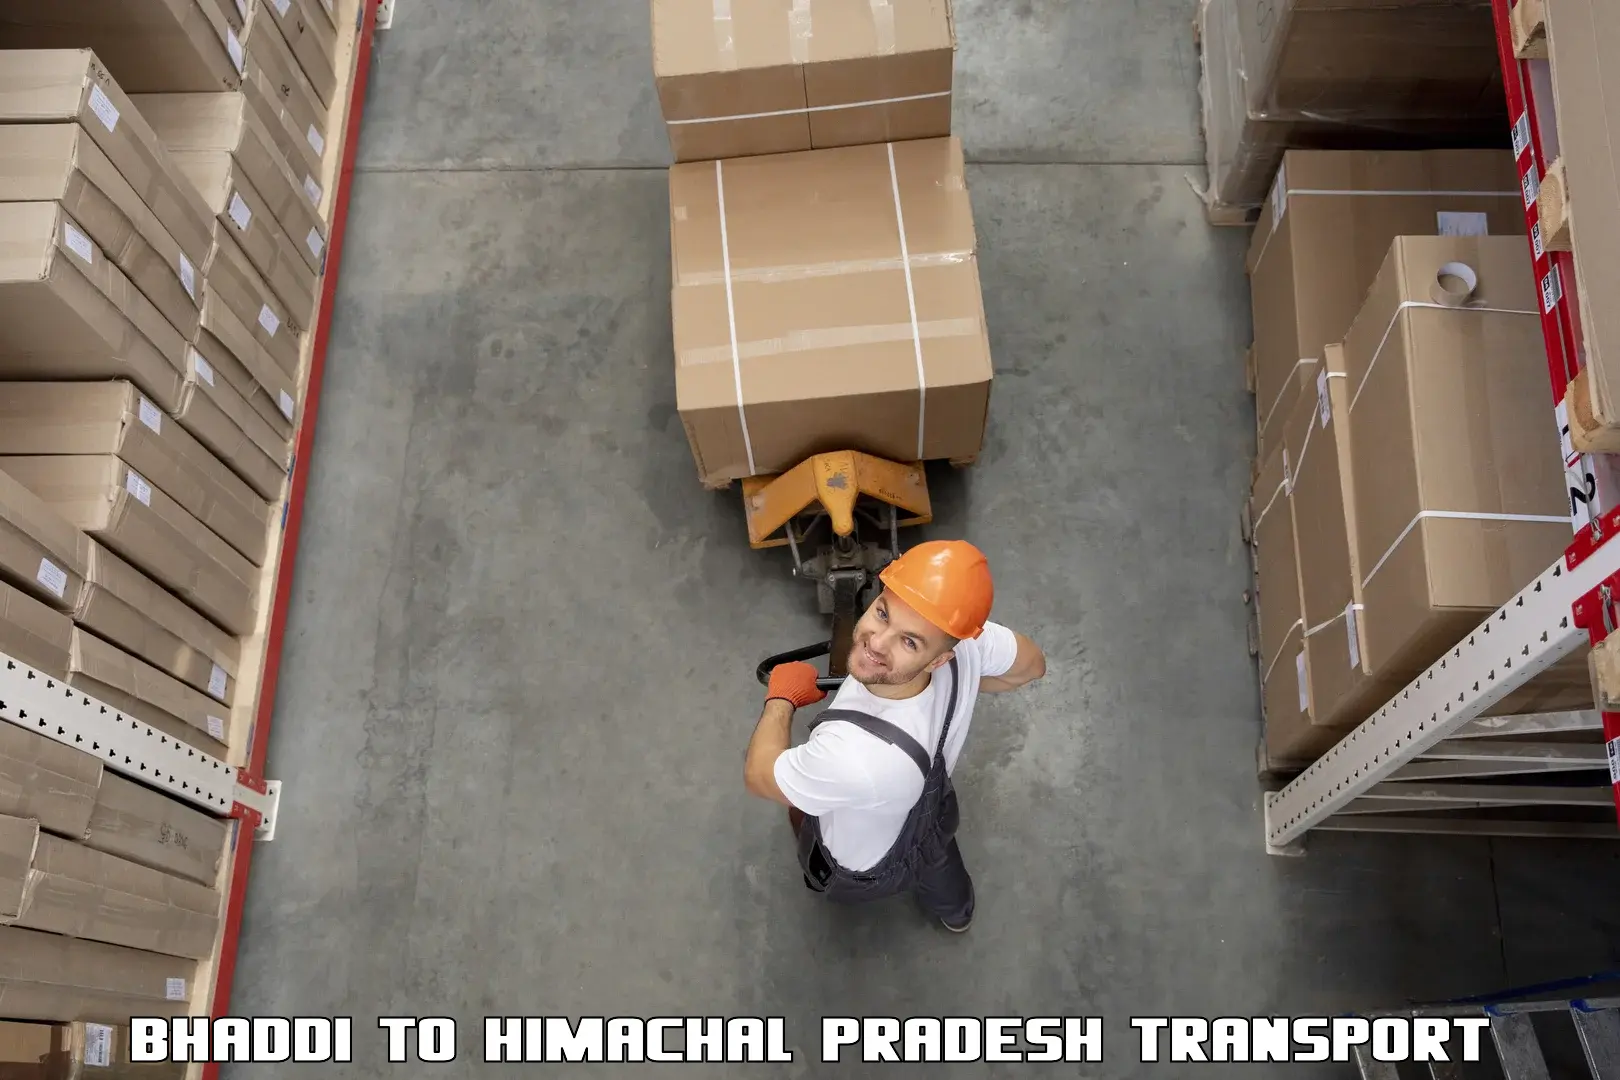 Cargo transport services Bhaddi to Manali